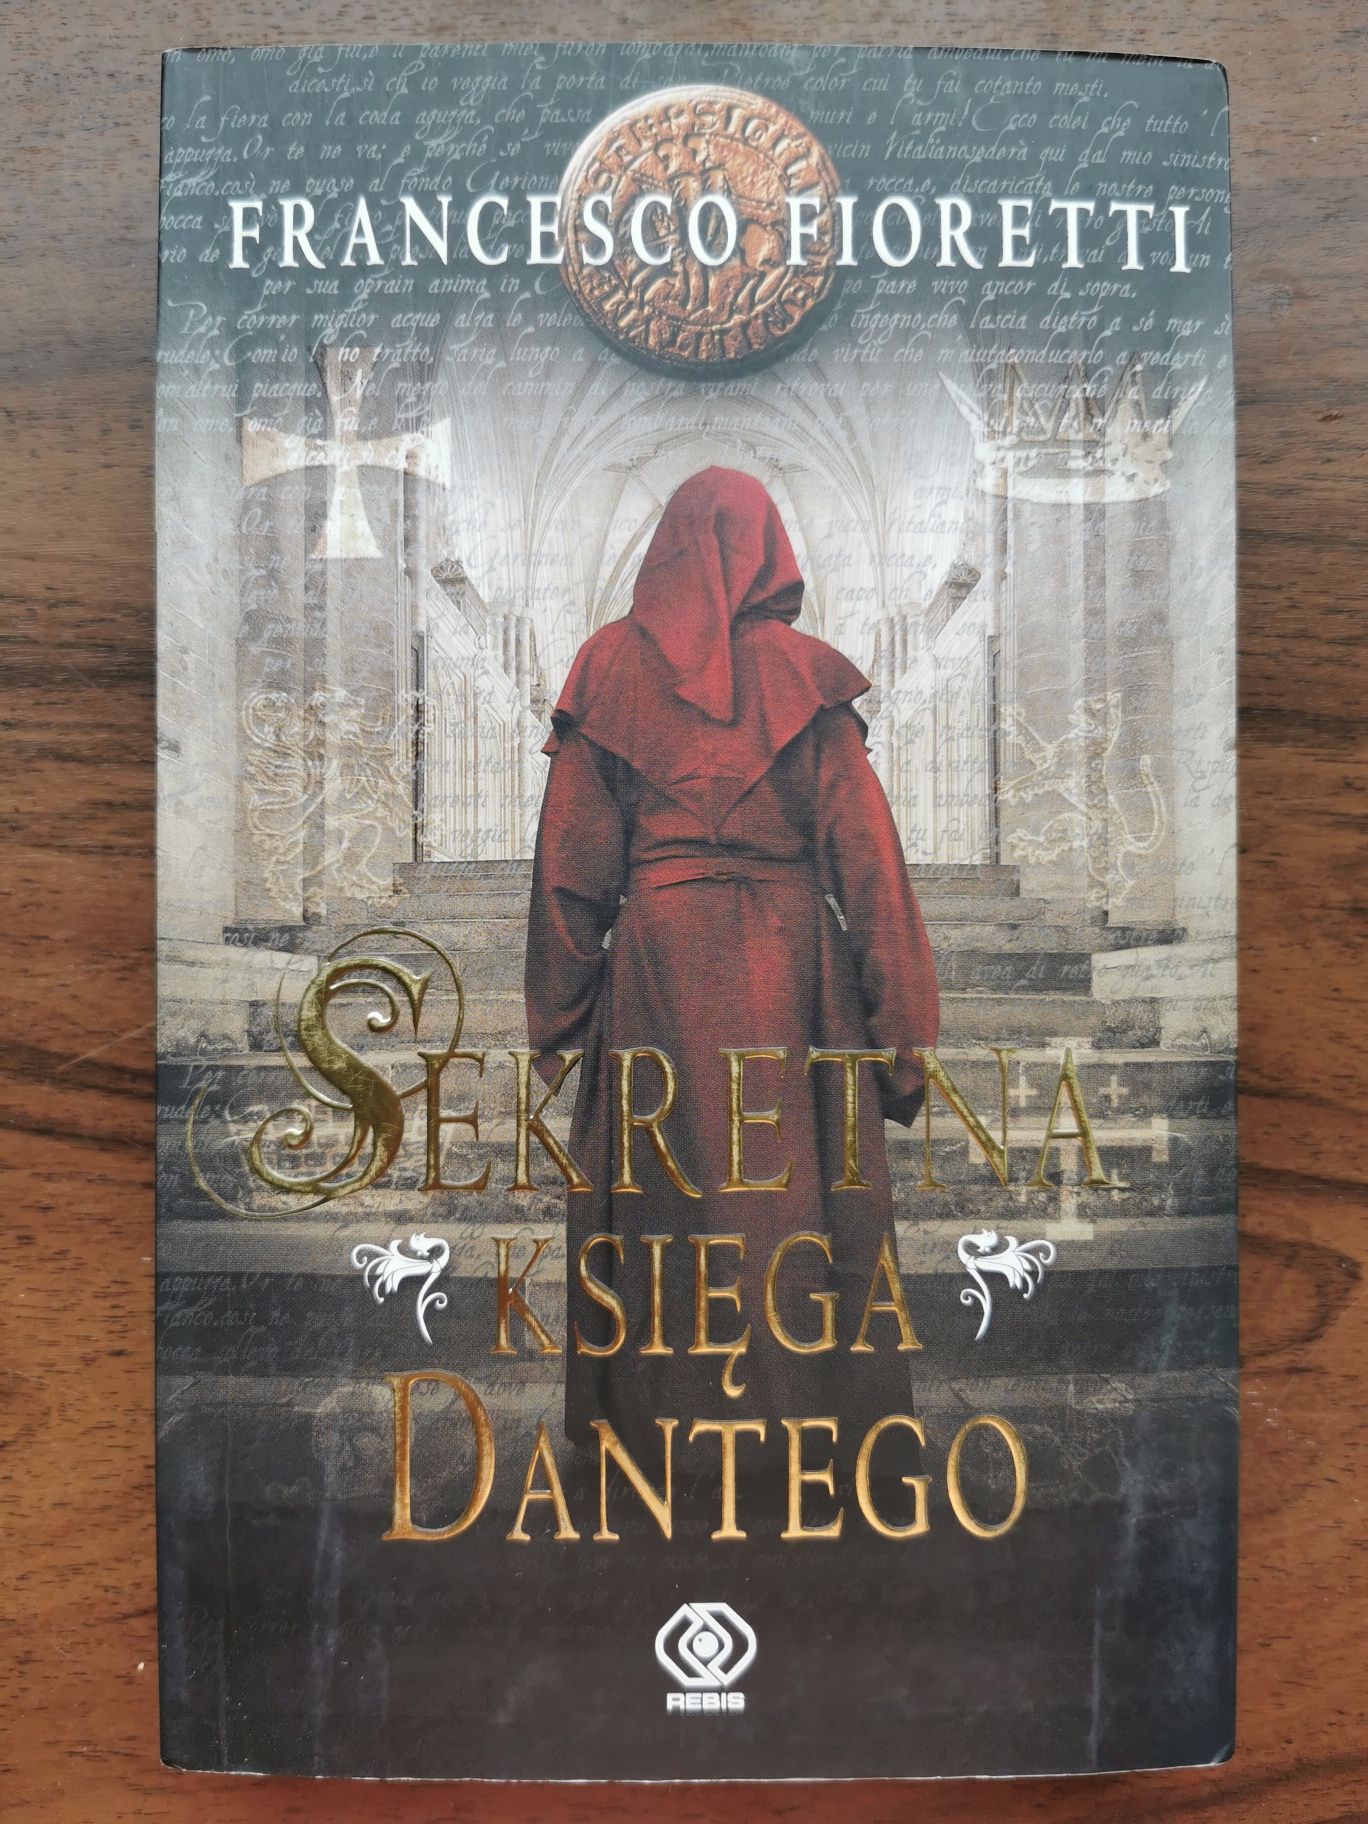 Sekretna ksiega Dantego - Francesco Fioretti